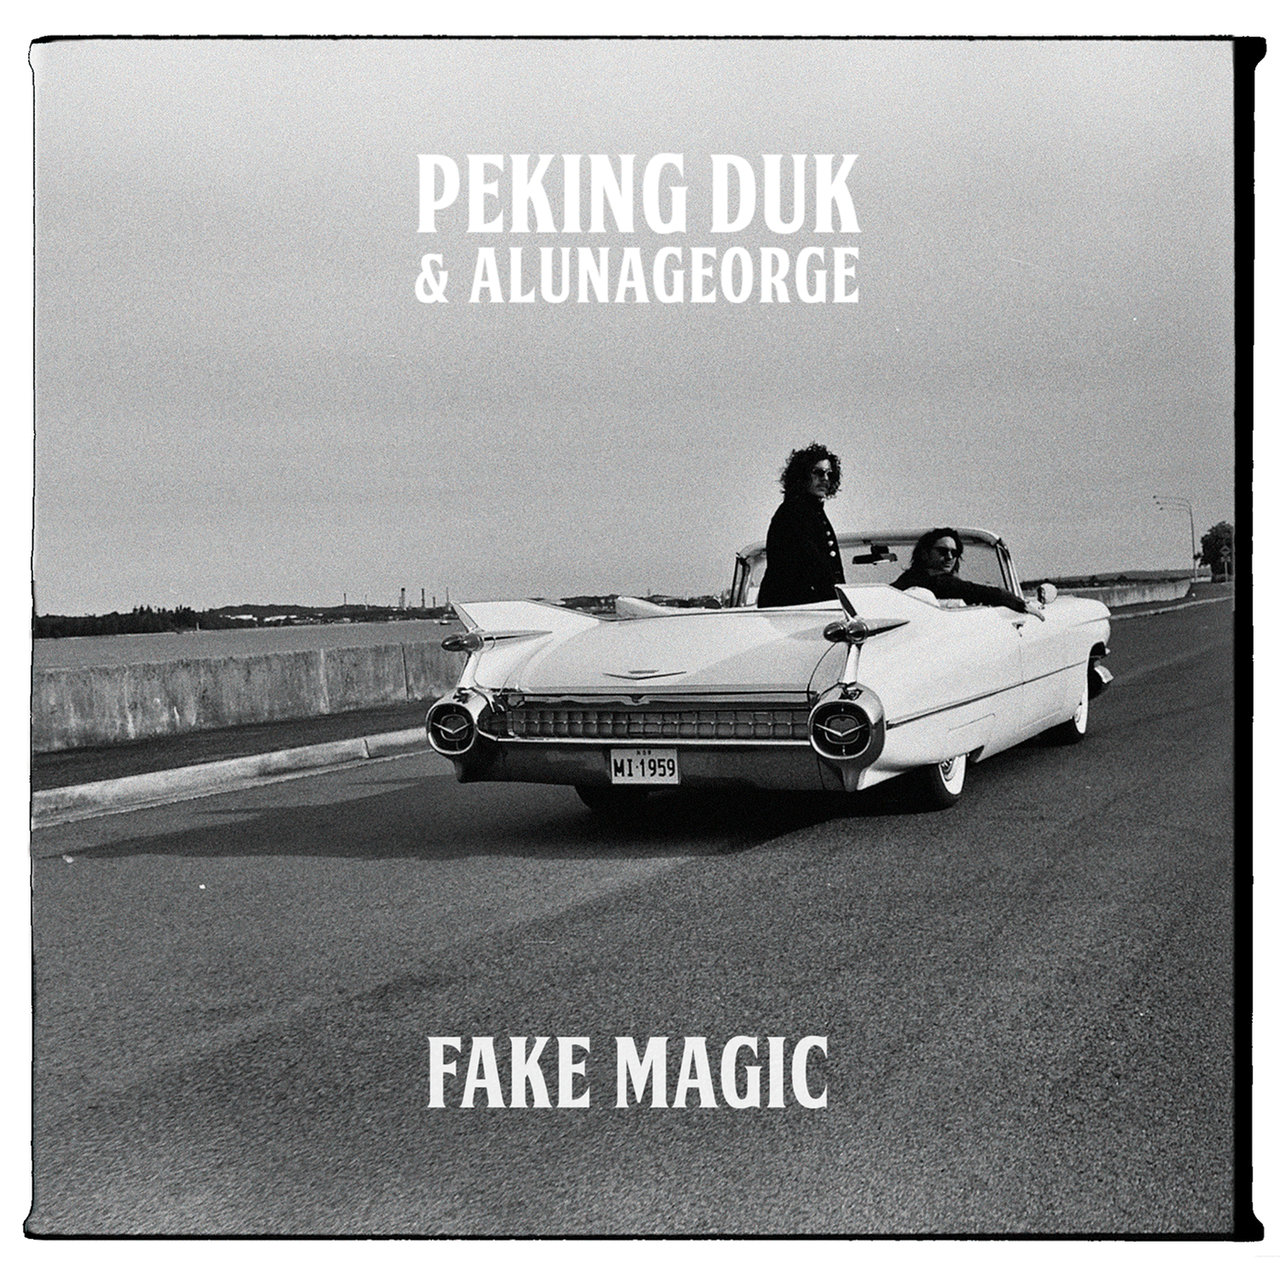 Peking Duk & AlunaGeorge Fake Magic cover artwork